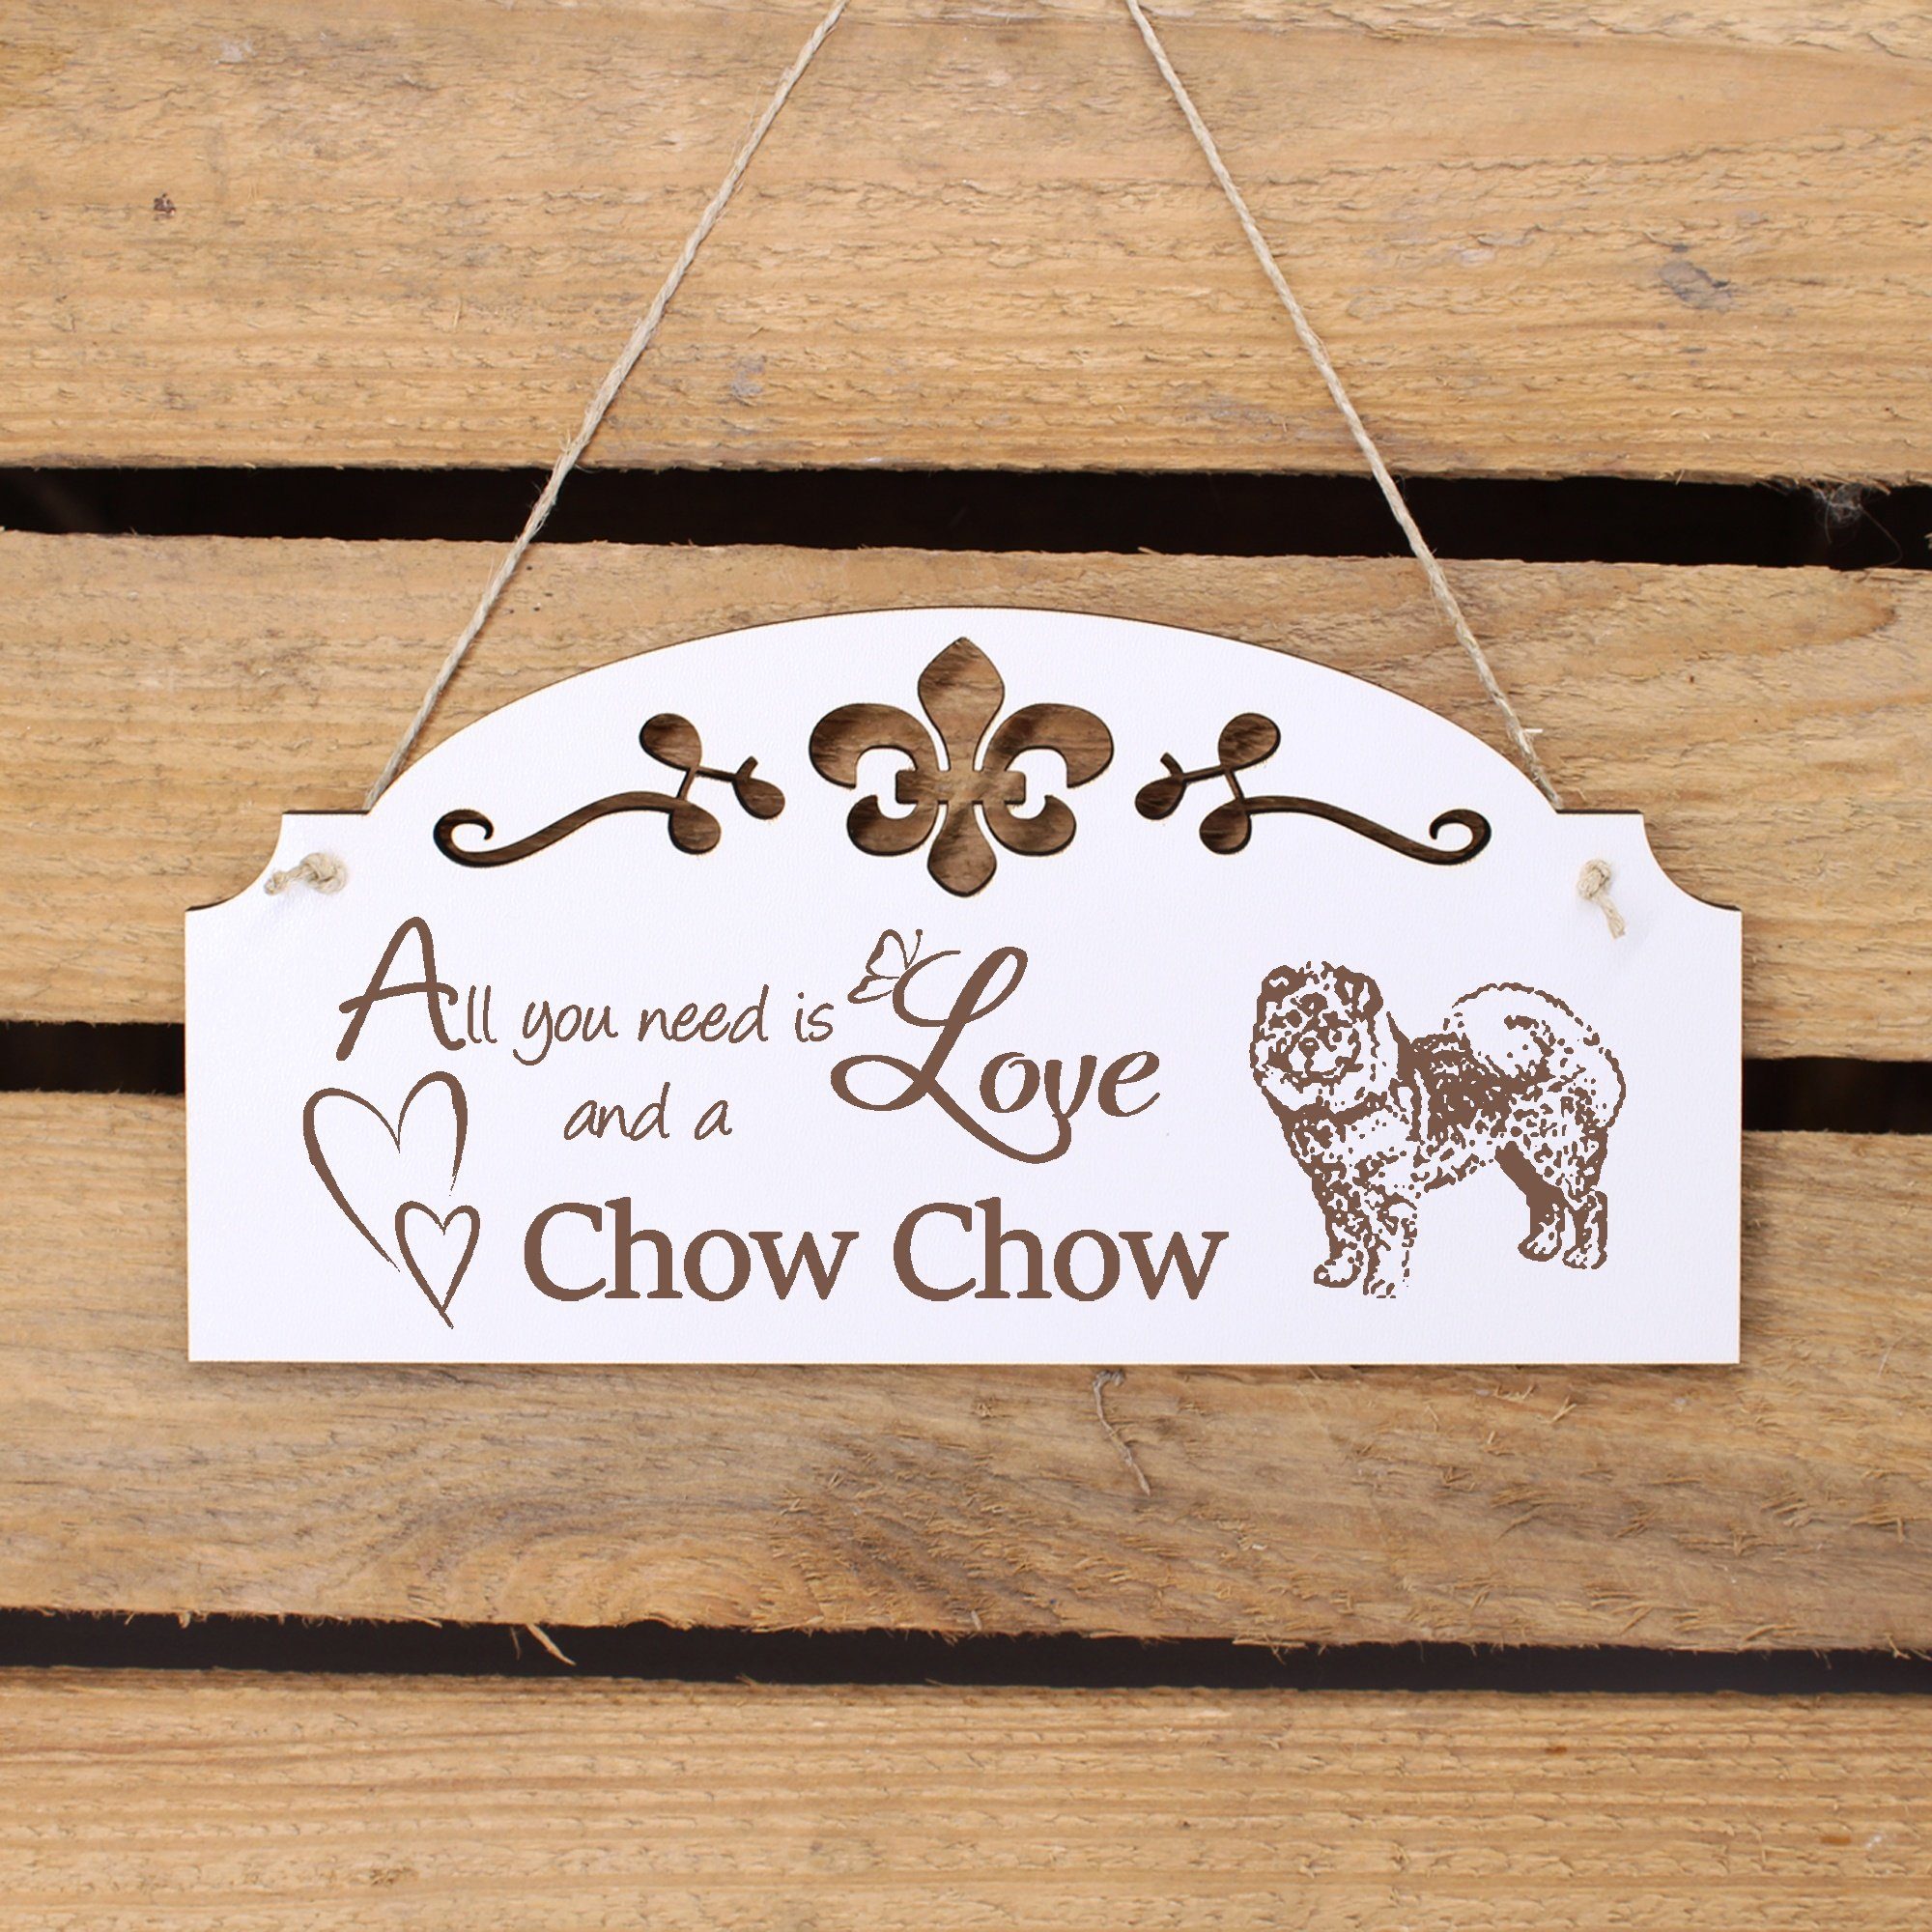 Dekolando Hängedekoration Chow Chow you Love need All is Deko 20x10cm